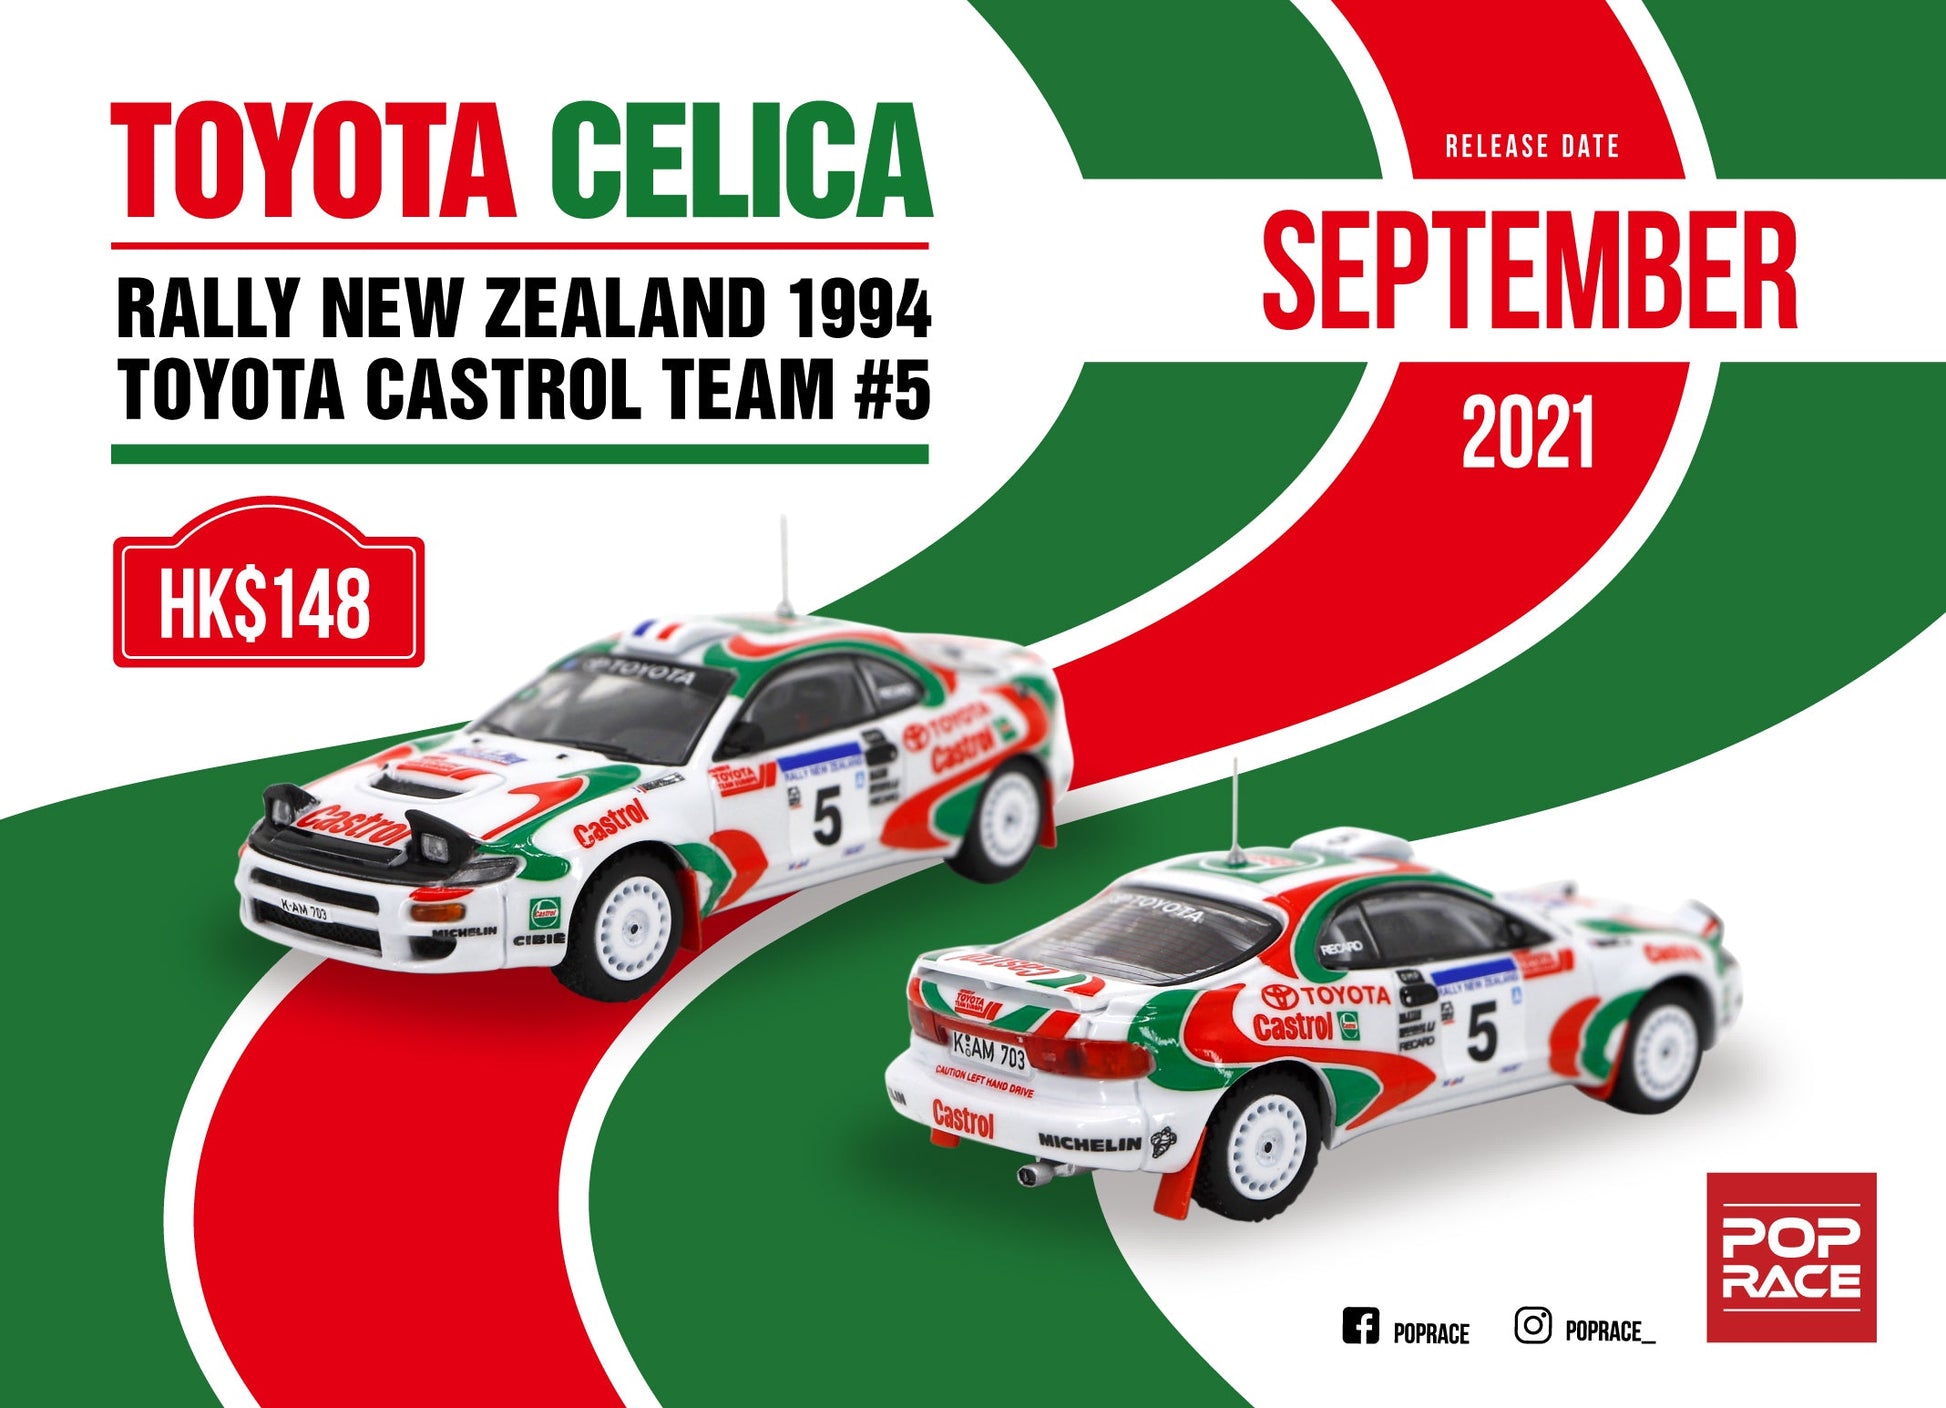 Pop Race 1/64 Toyota Celica - Rally New Zealand 1994 #5 Pop Race